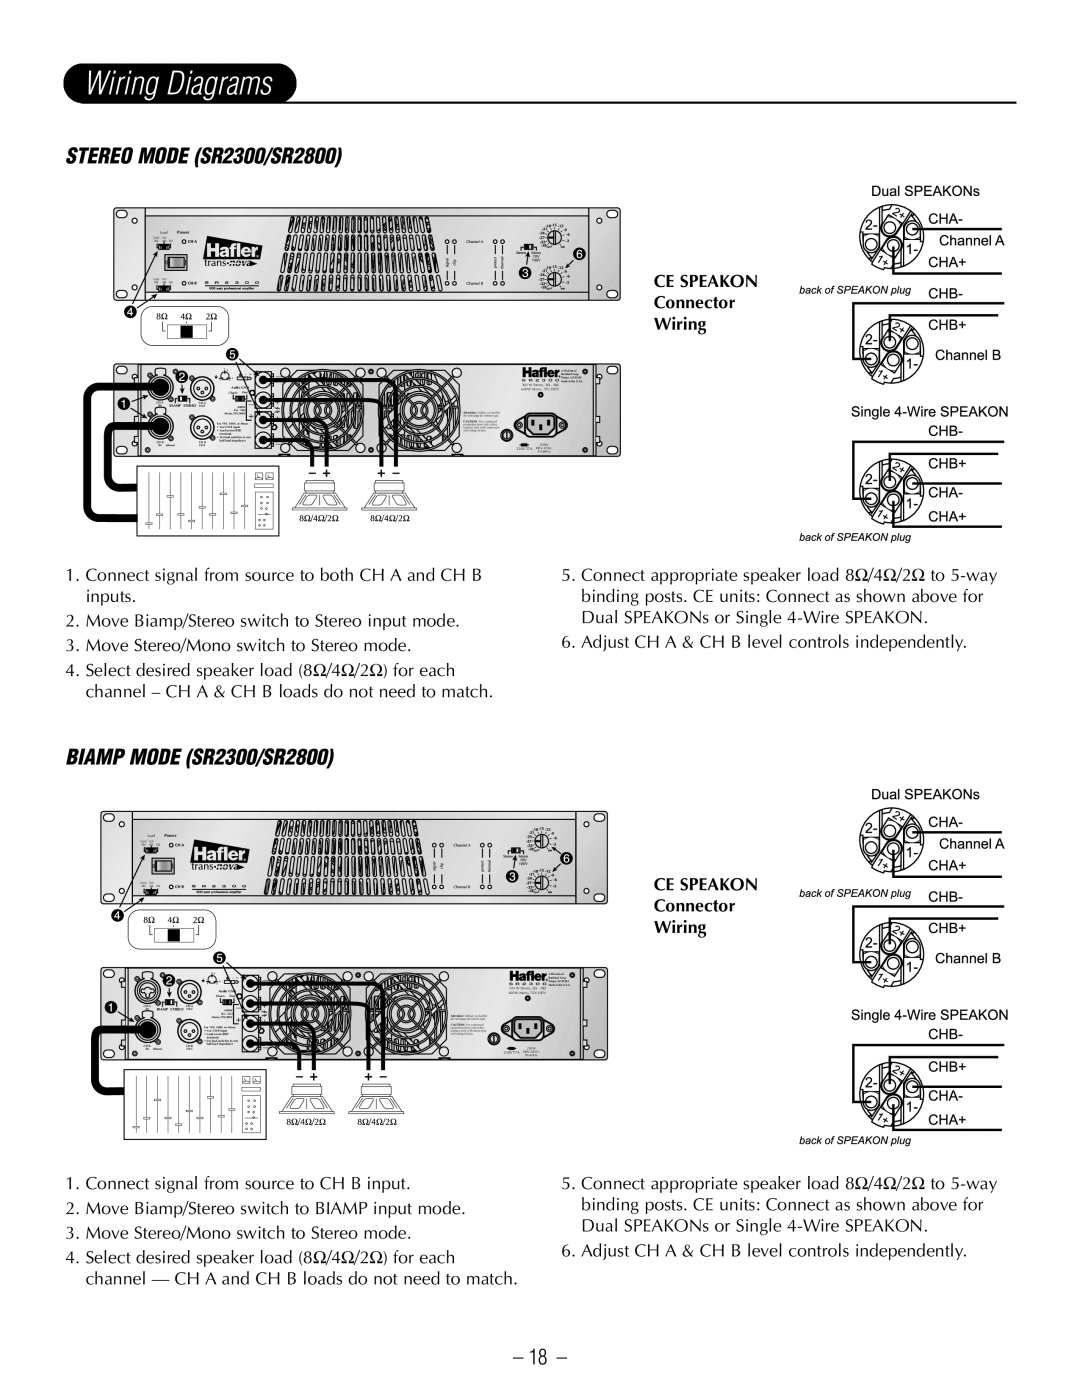 Hafler SR2800CE Wiring Diagrams, STEREO MODE SR2300/SR2800, BIAMP MODE SR2300/SR2800, CE SPEAKON Connector Wiring 